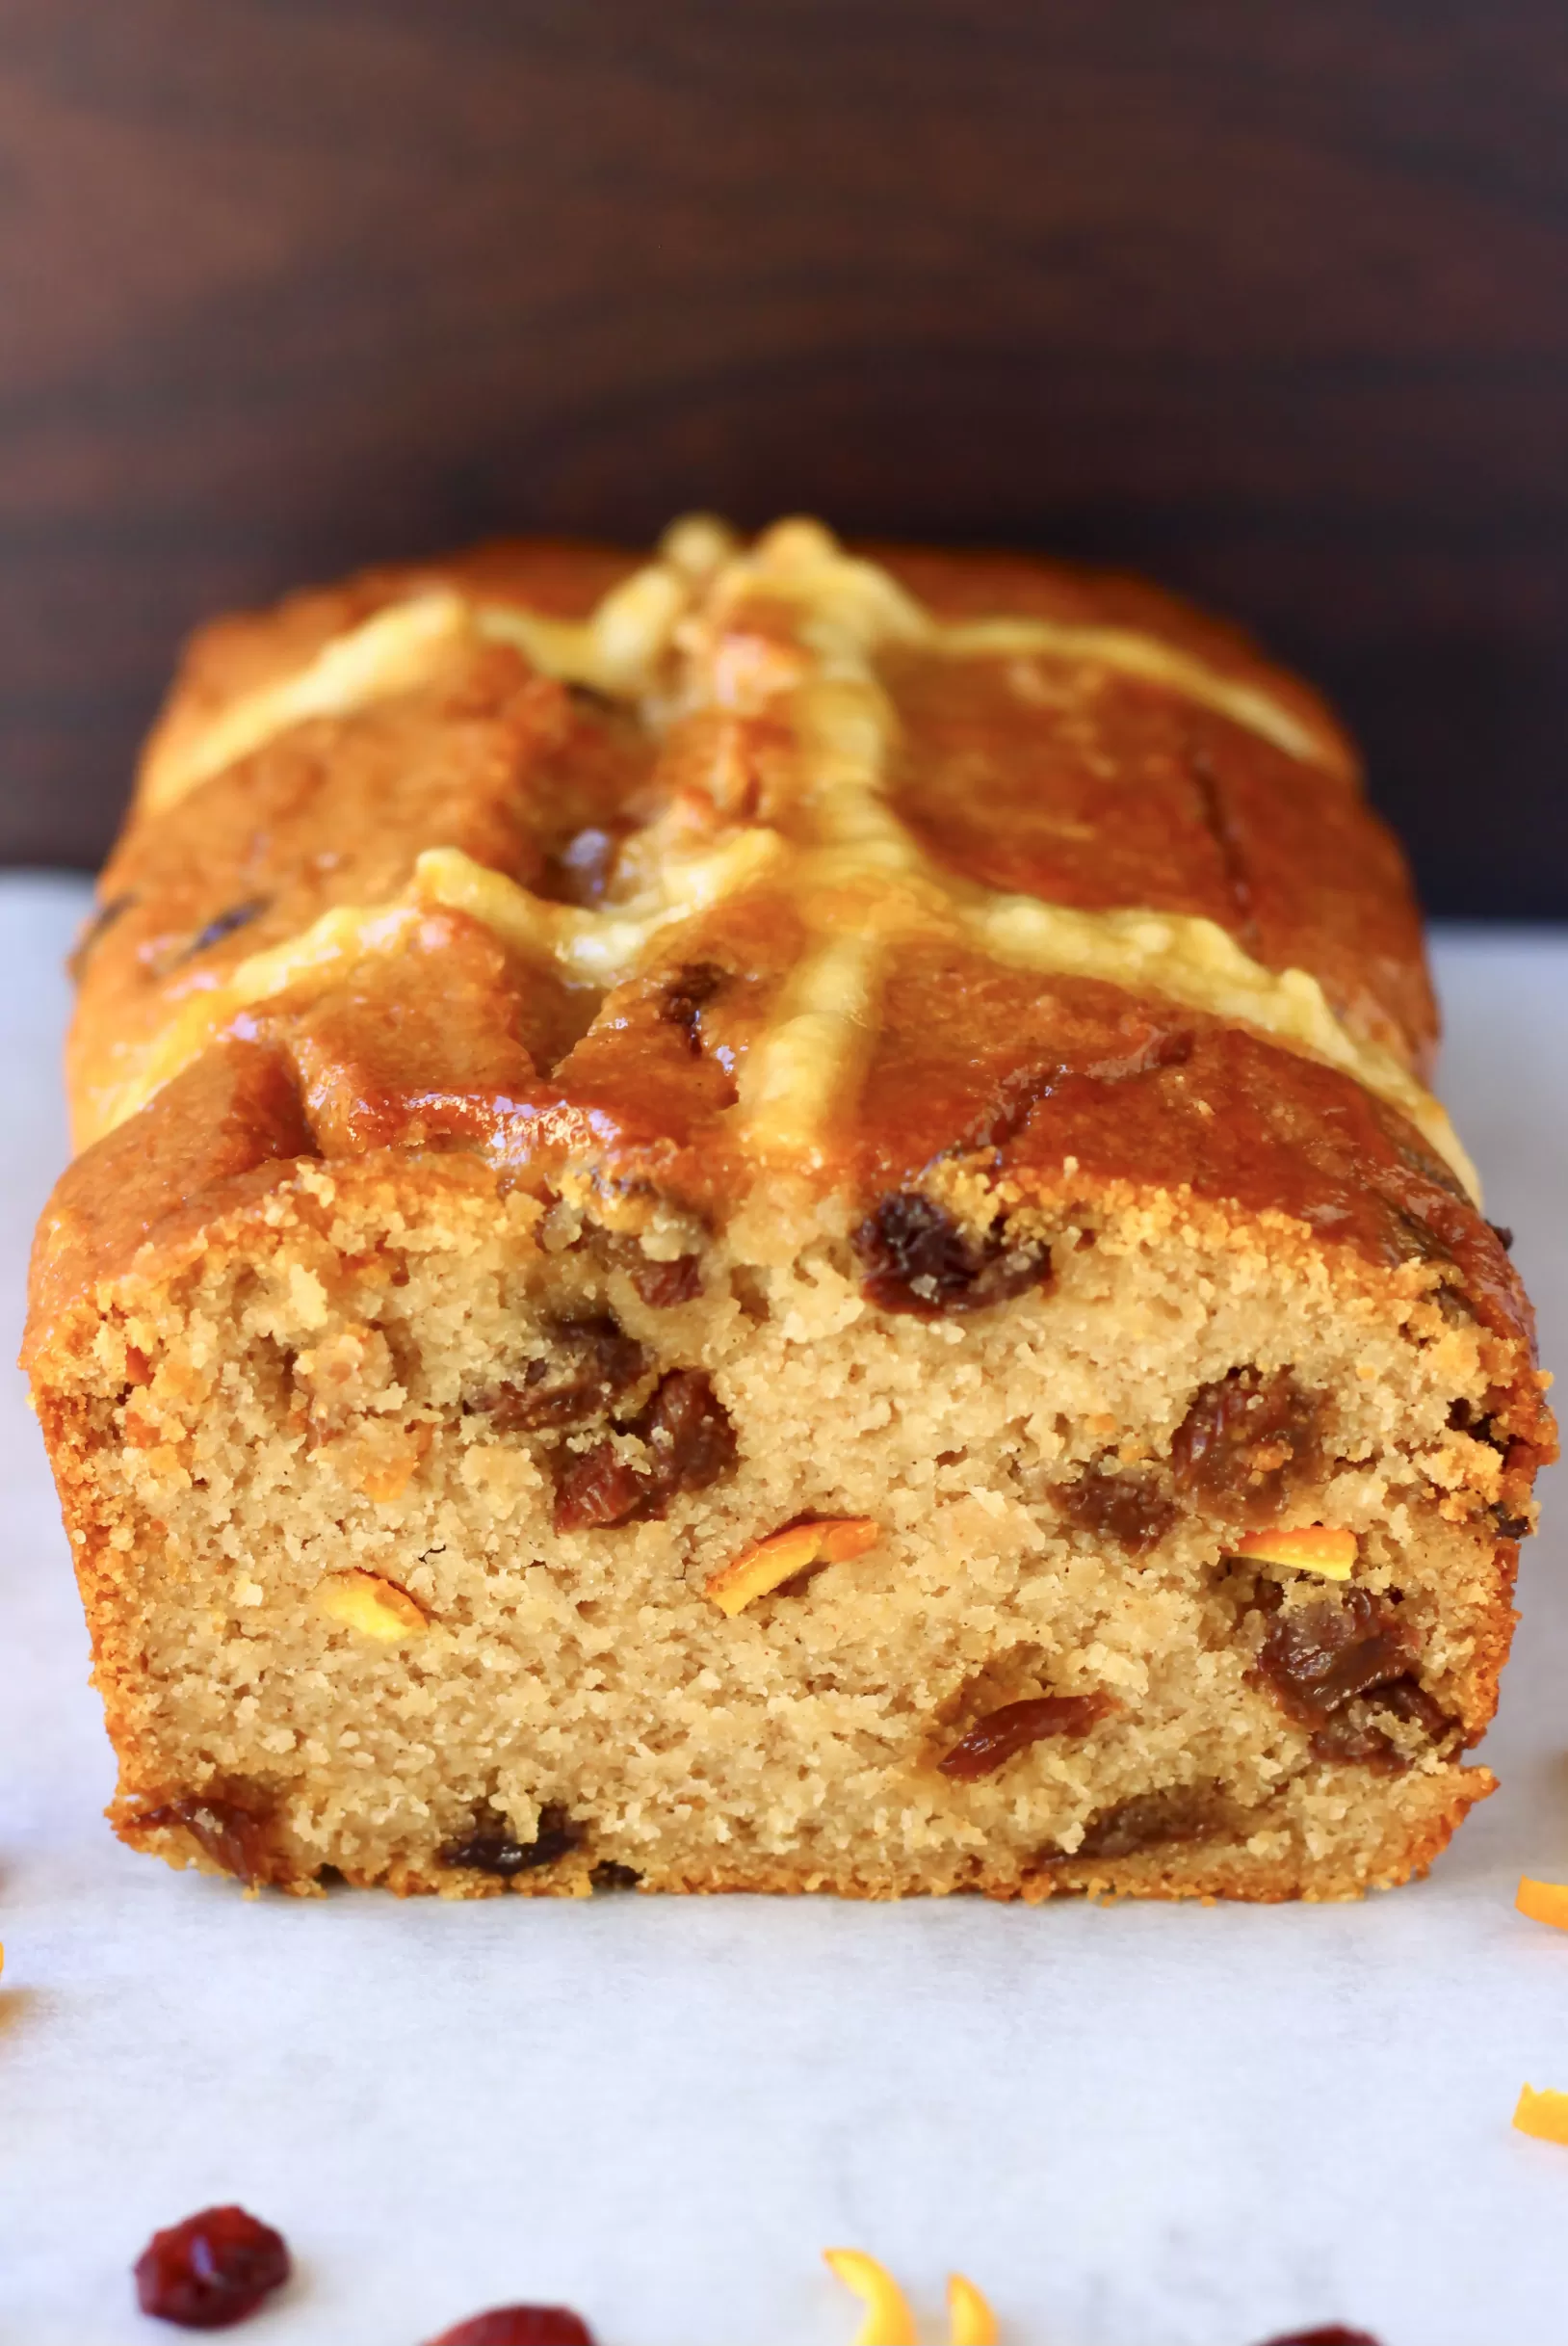 A sliced gluten-free vegan hot cross bun loaf with raisins and orange peel